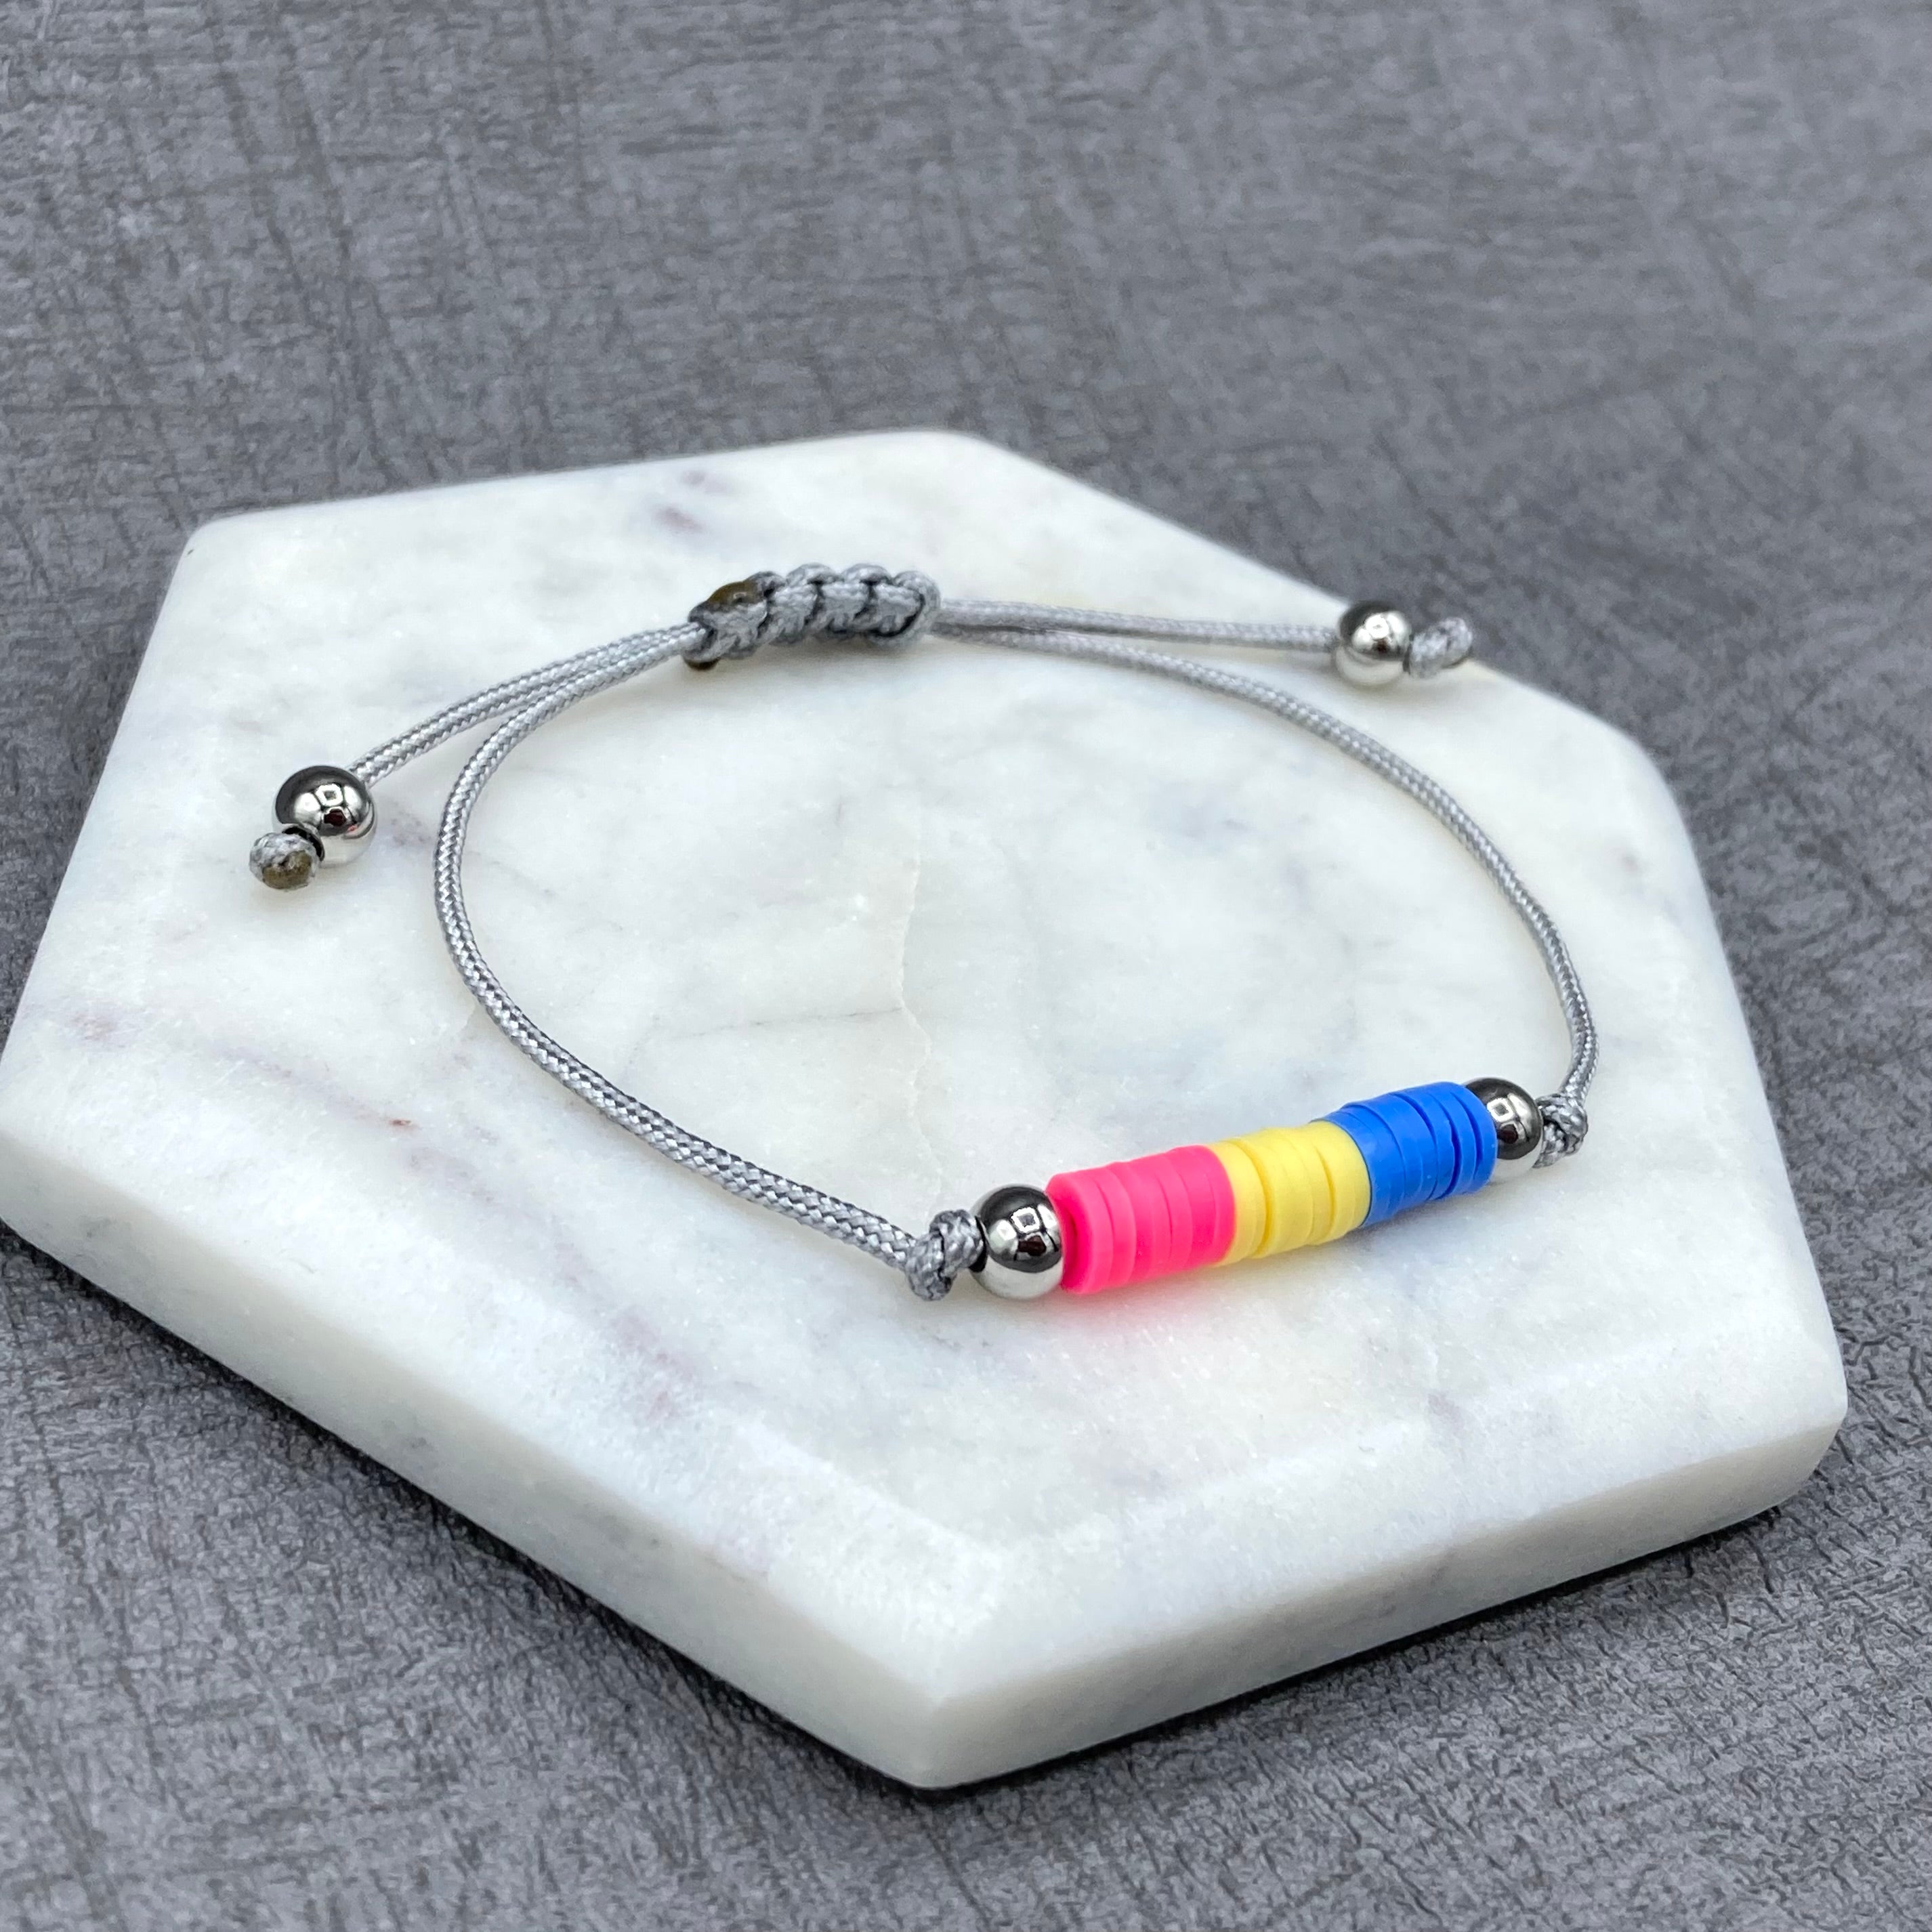 pride bracelet pansexual pink yellow blue beads